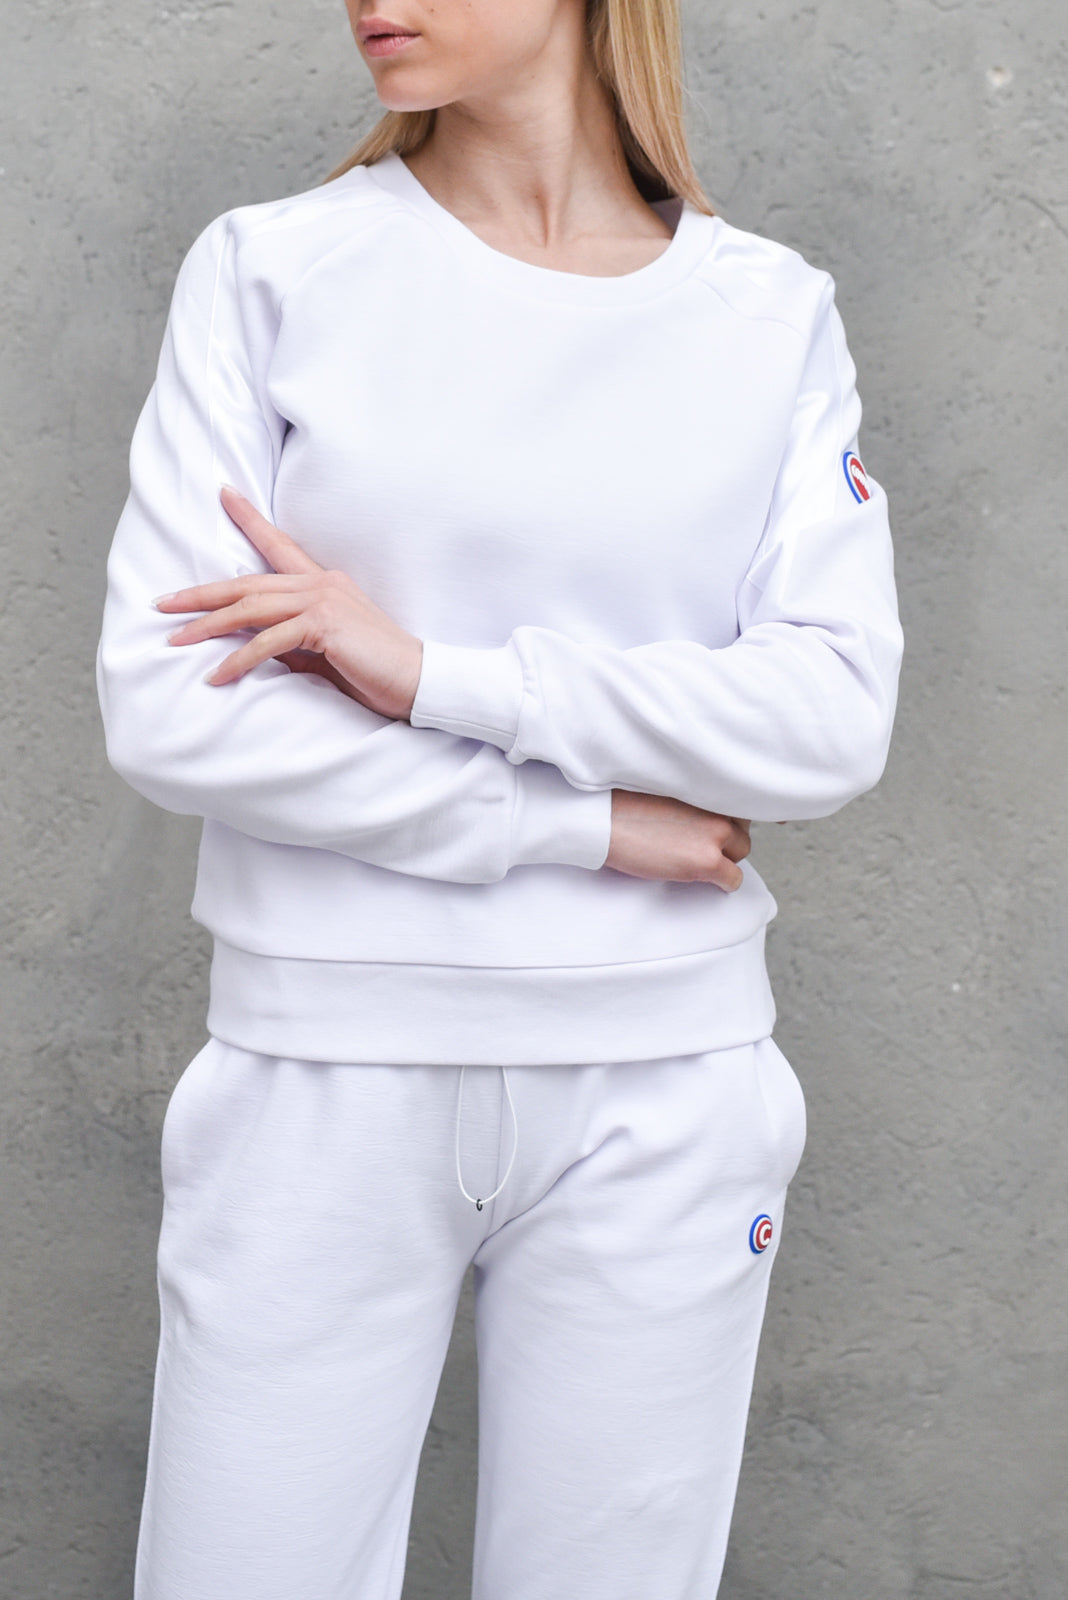 Women's crewneck sweatshirt with logo on the white shoulder 9050 white bianco woman  - 3